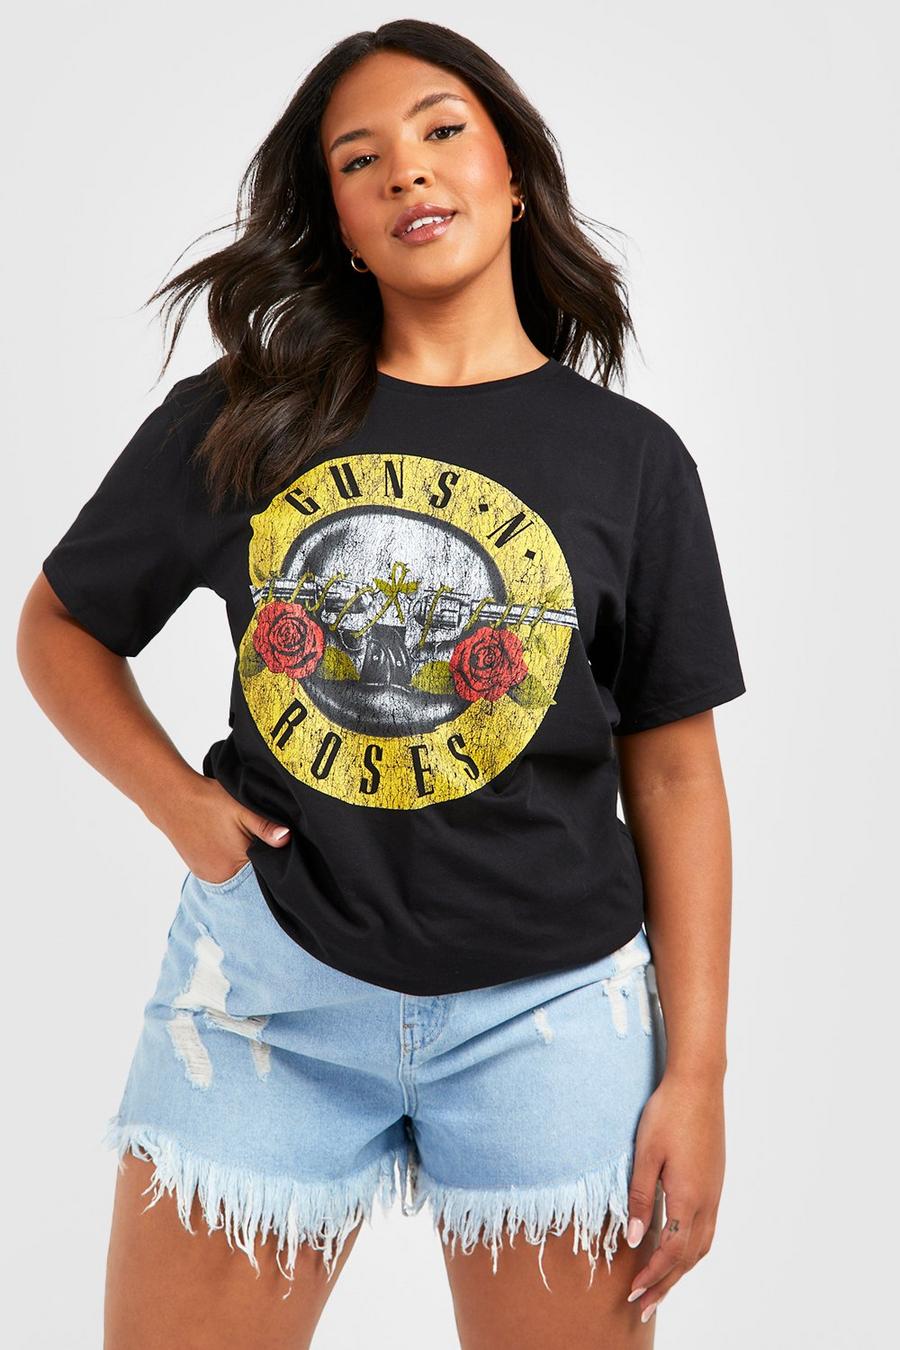 face Plus Guns N Roses Band T-Shirt